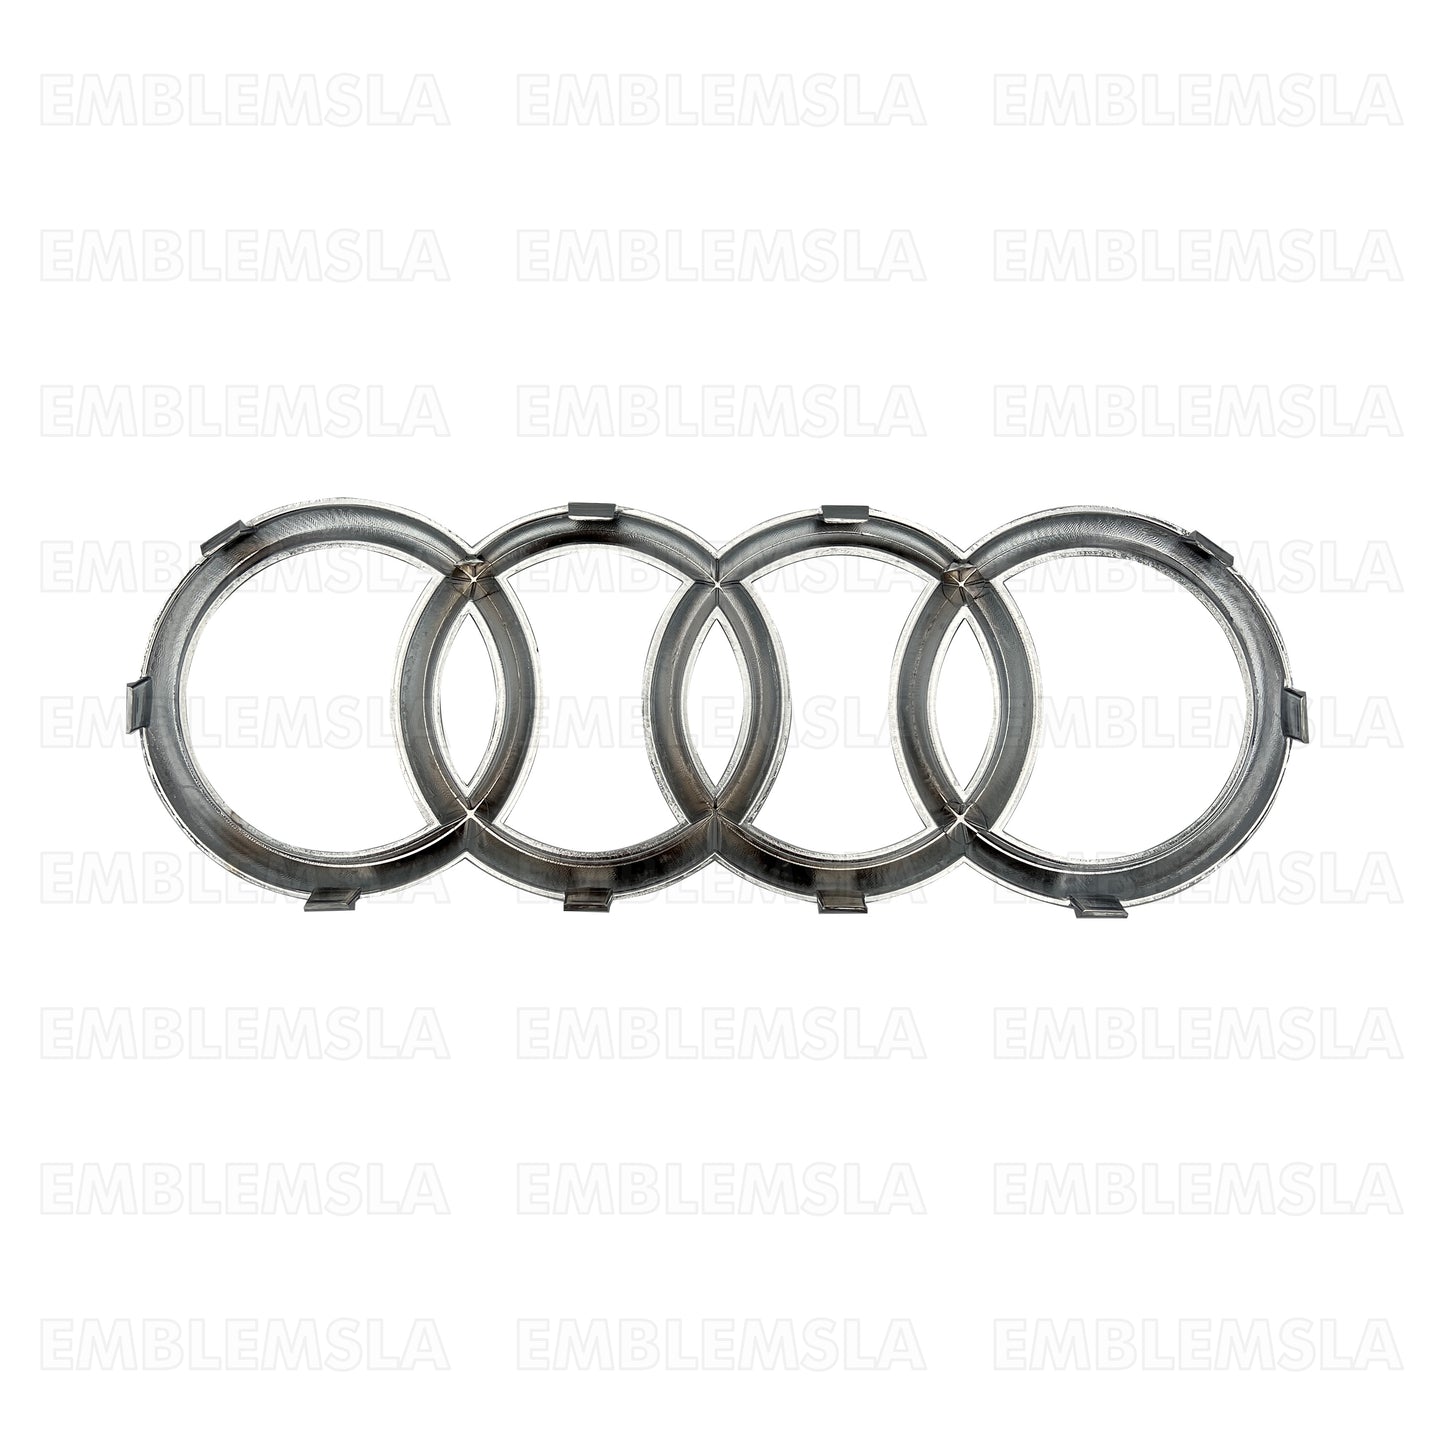 Audi Rings Chrome Front Grille Emblem Badge A1 A3 A4 A5 S5 A6 S6 A7 TT 273mm